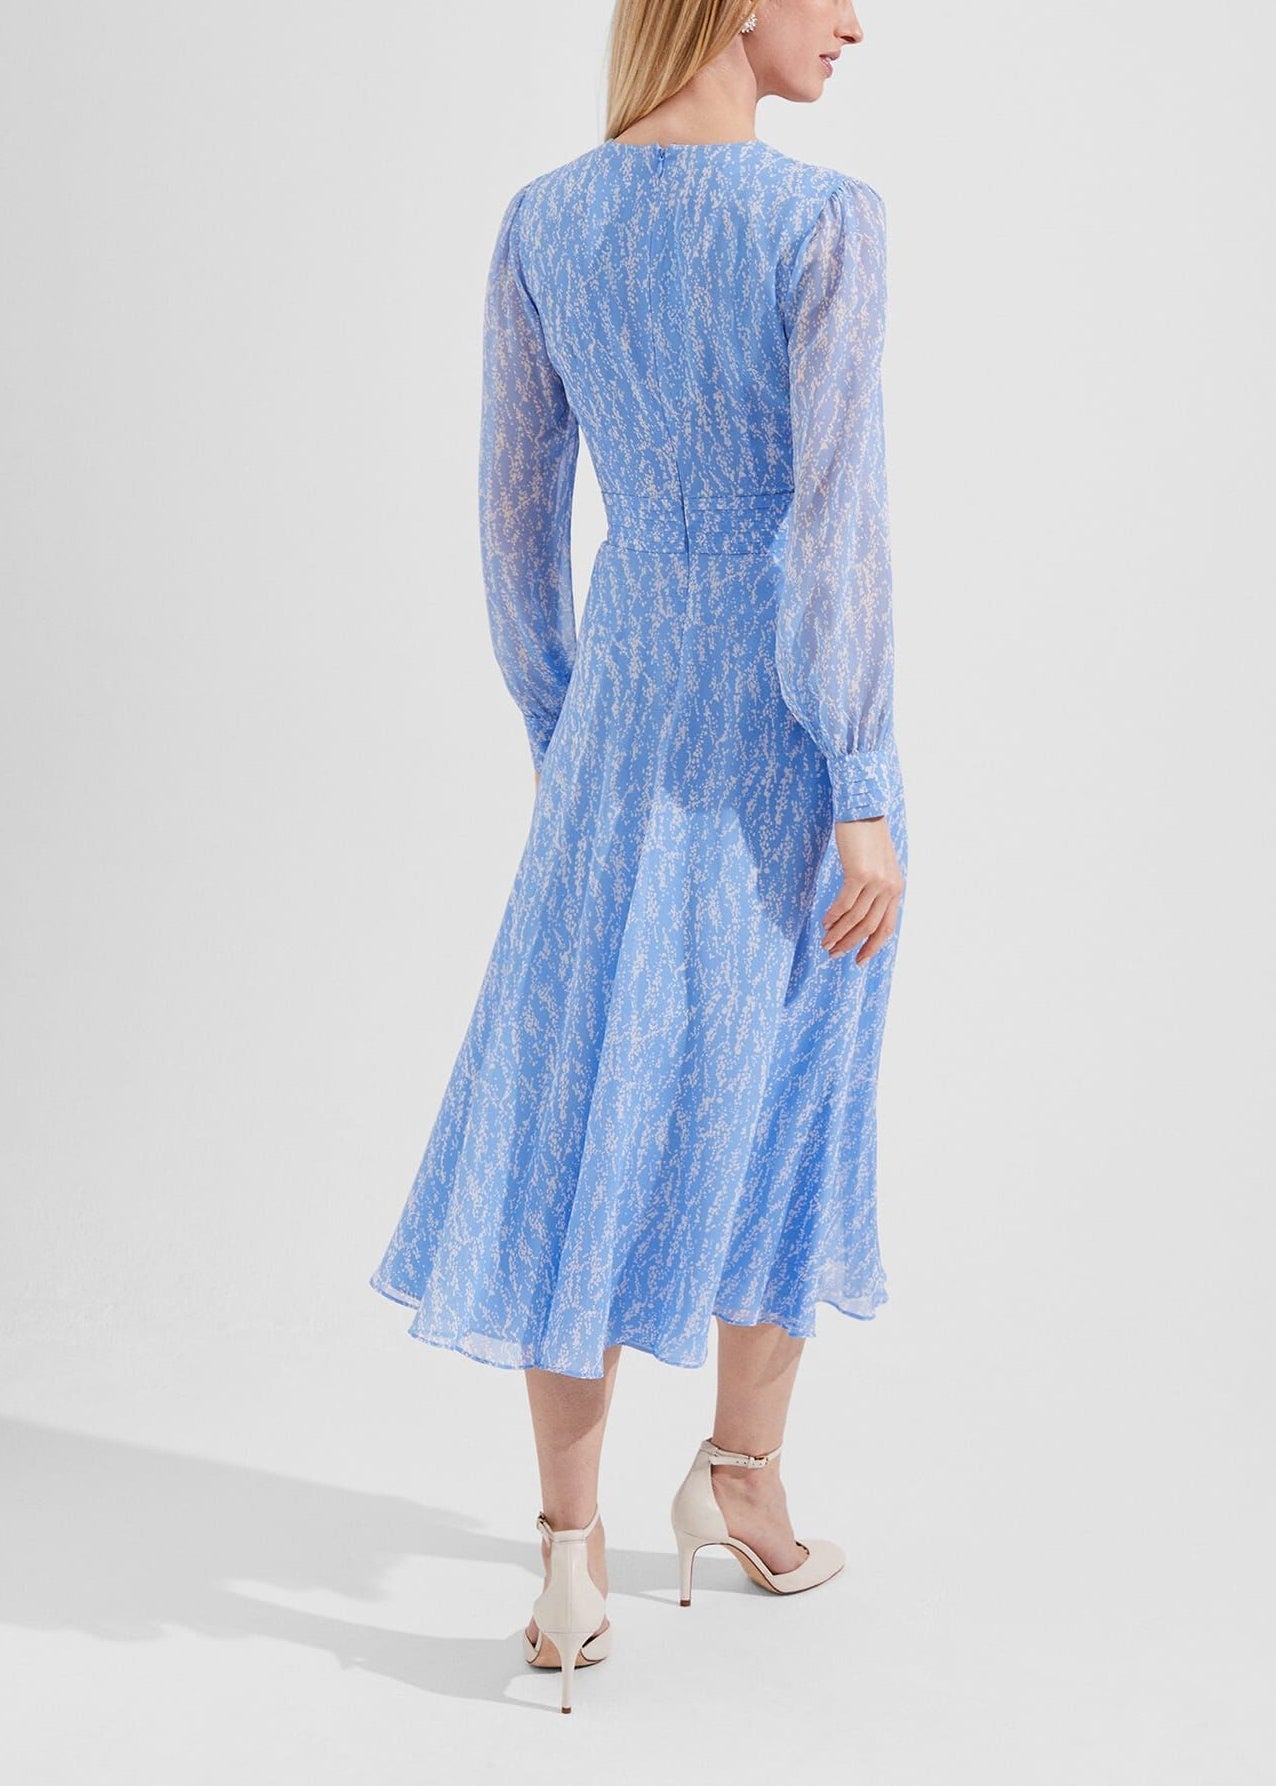 Viviana Silk Dress 0123/5426/3793l00 Blue-Multi